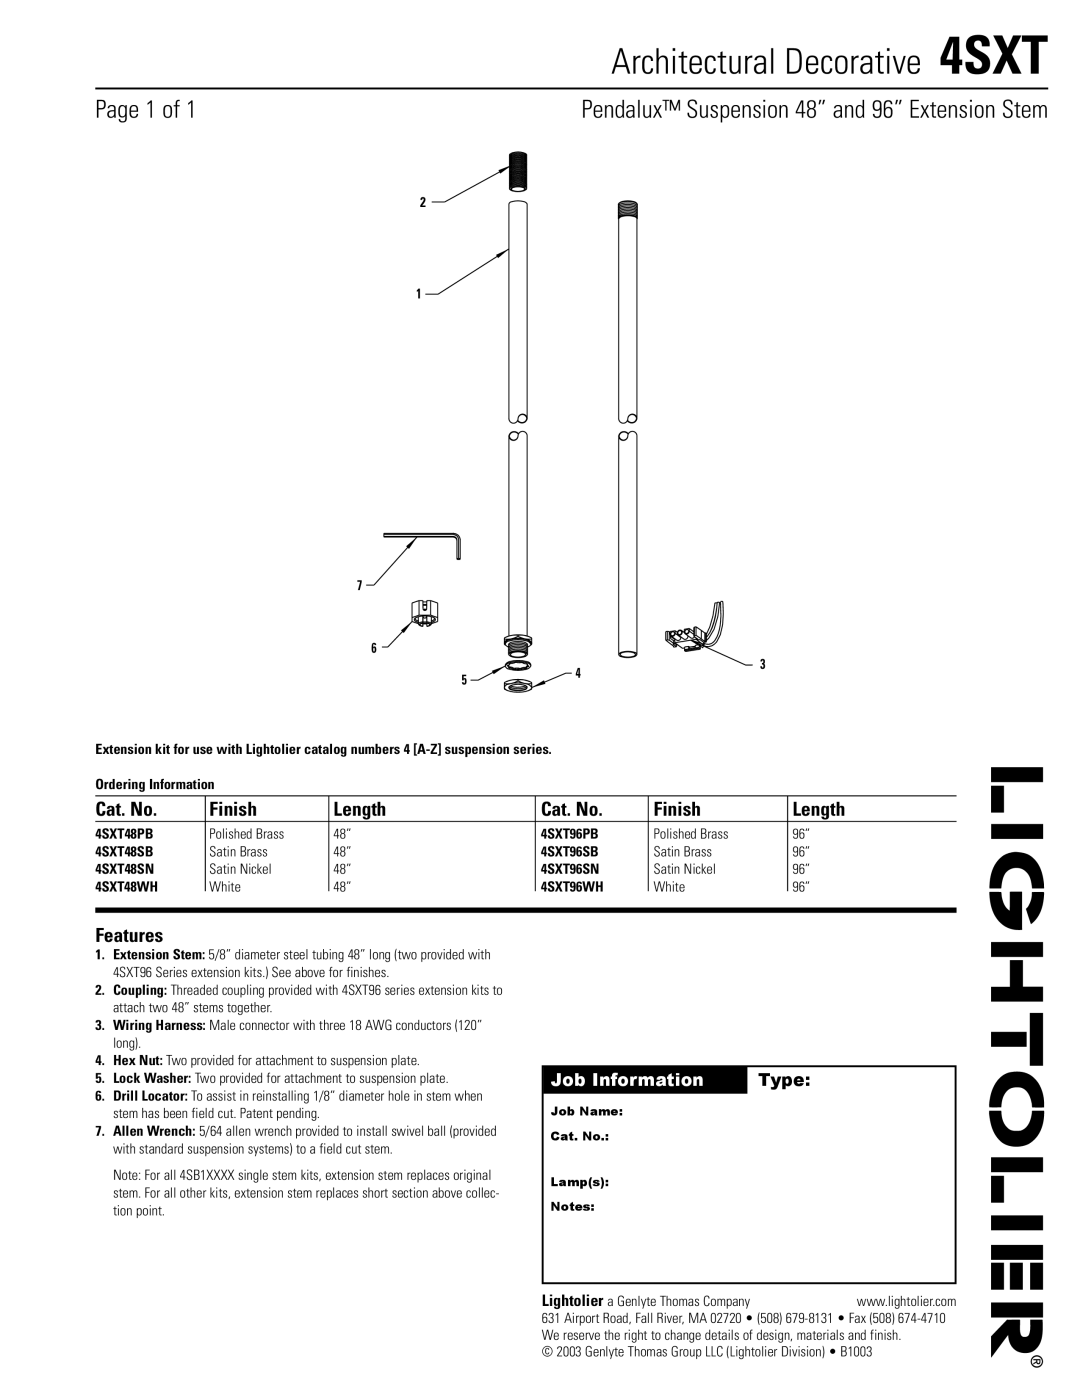 Lightolier manual Architectural Decorative 4SXT, Page 1 of, Pendalux Suspension 48” and 96” Extension Stem, Cat. No 